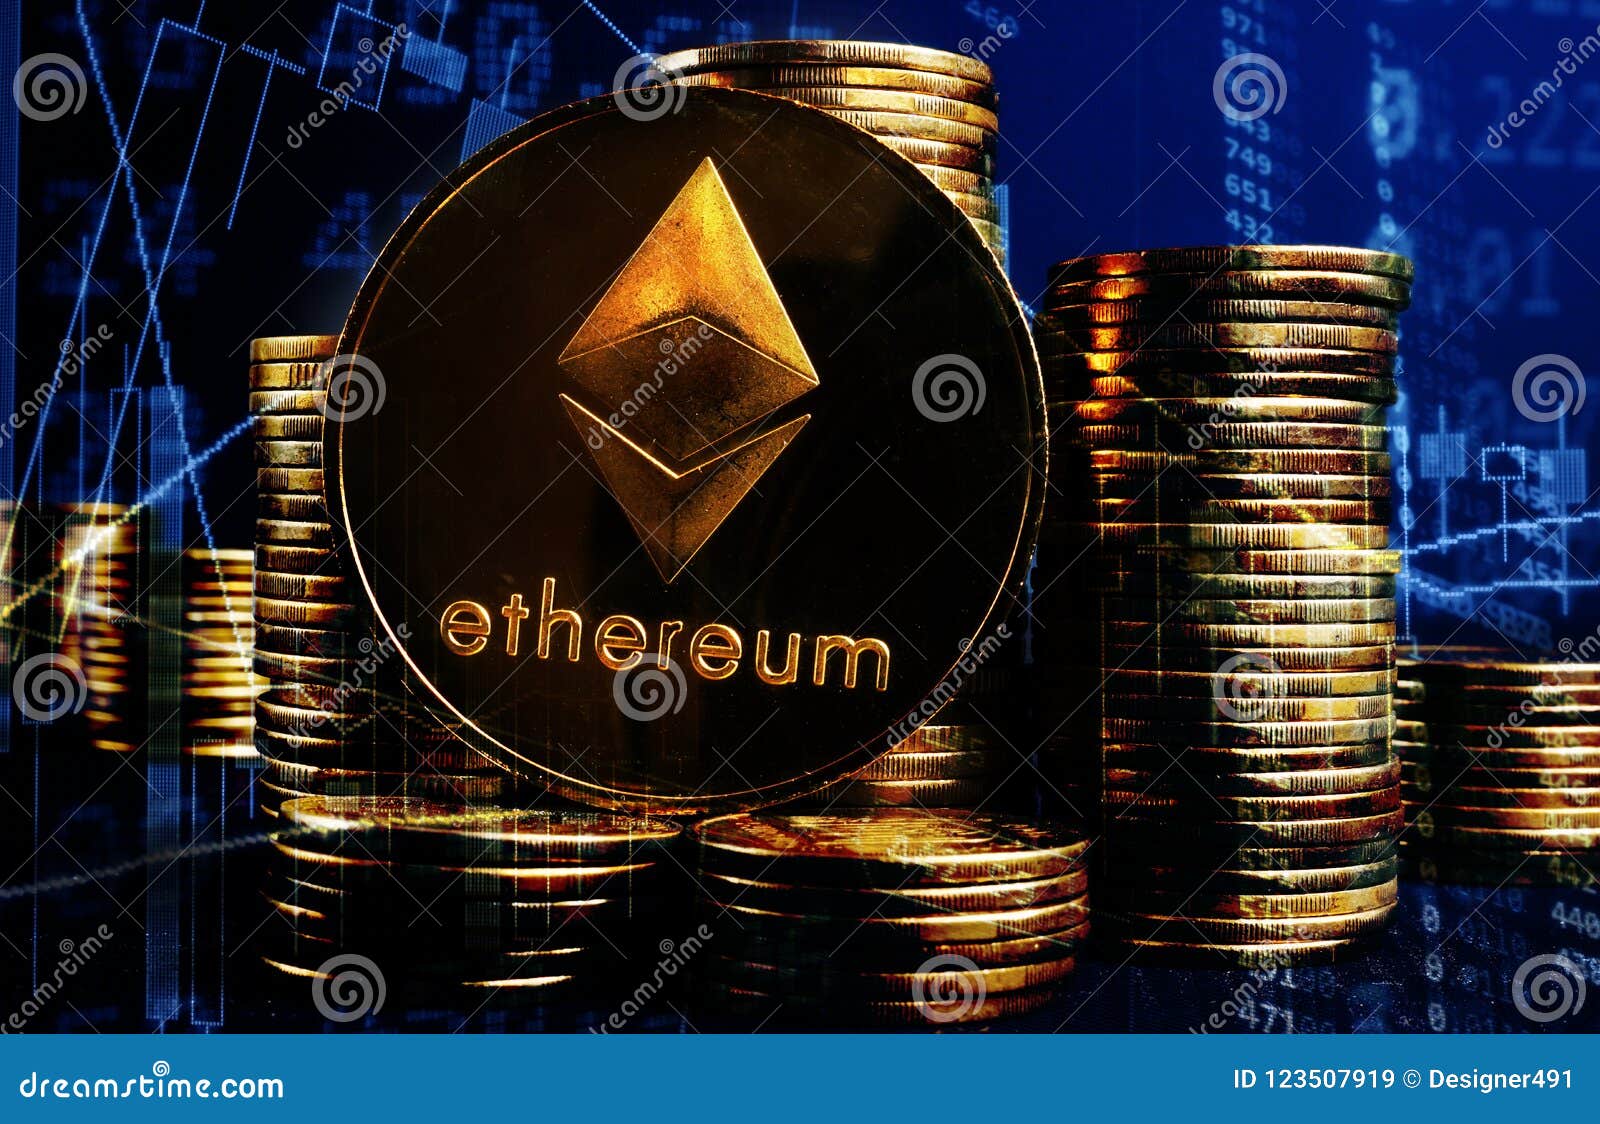 ethereum cryptocurrency exchange